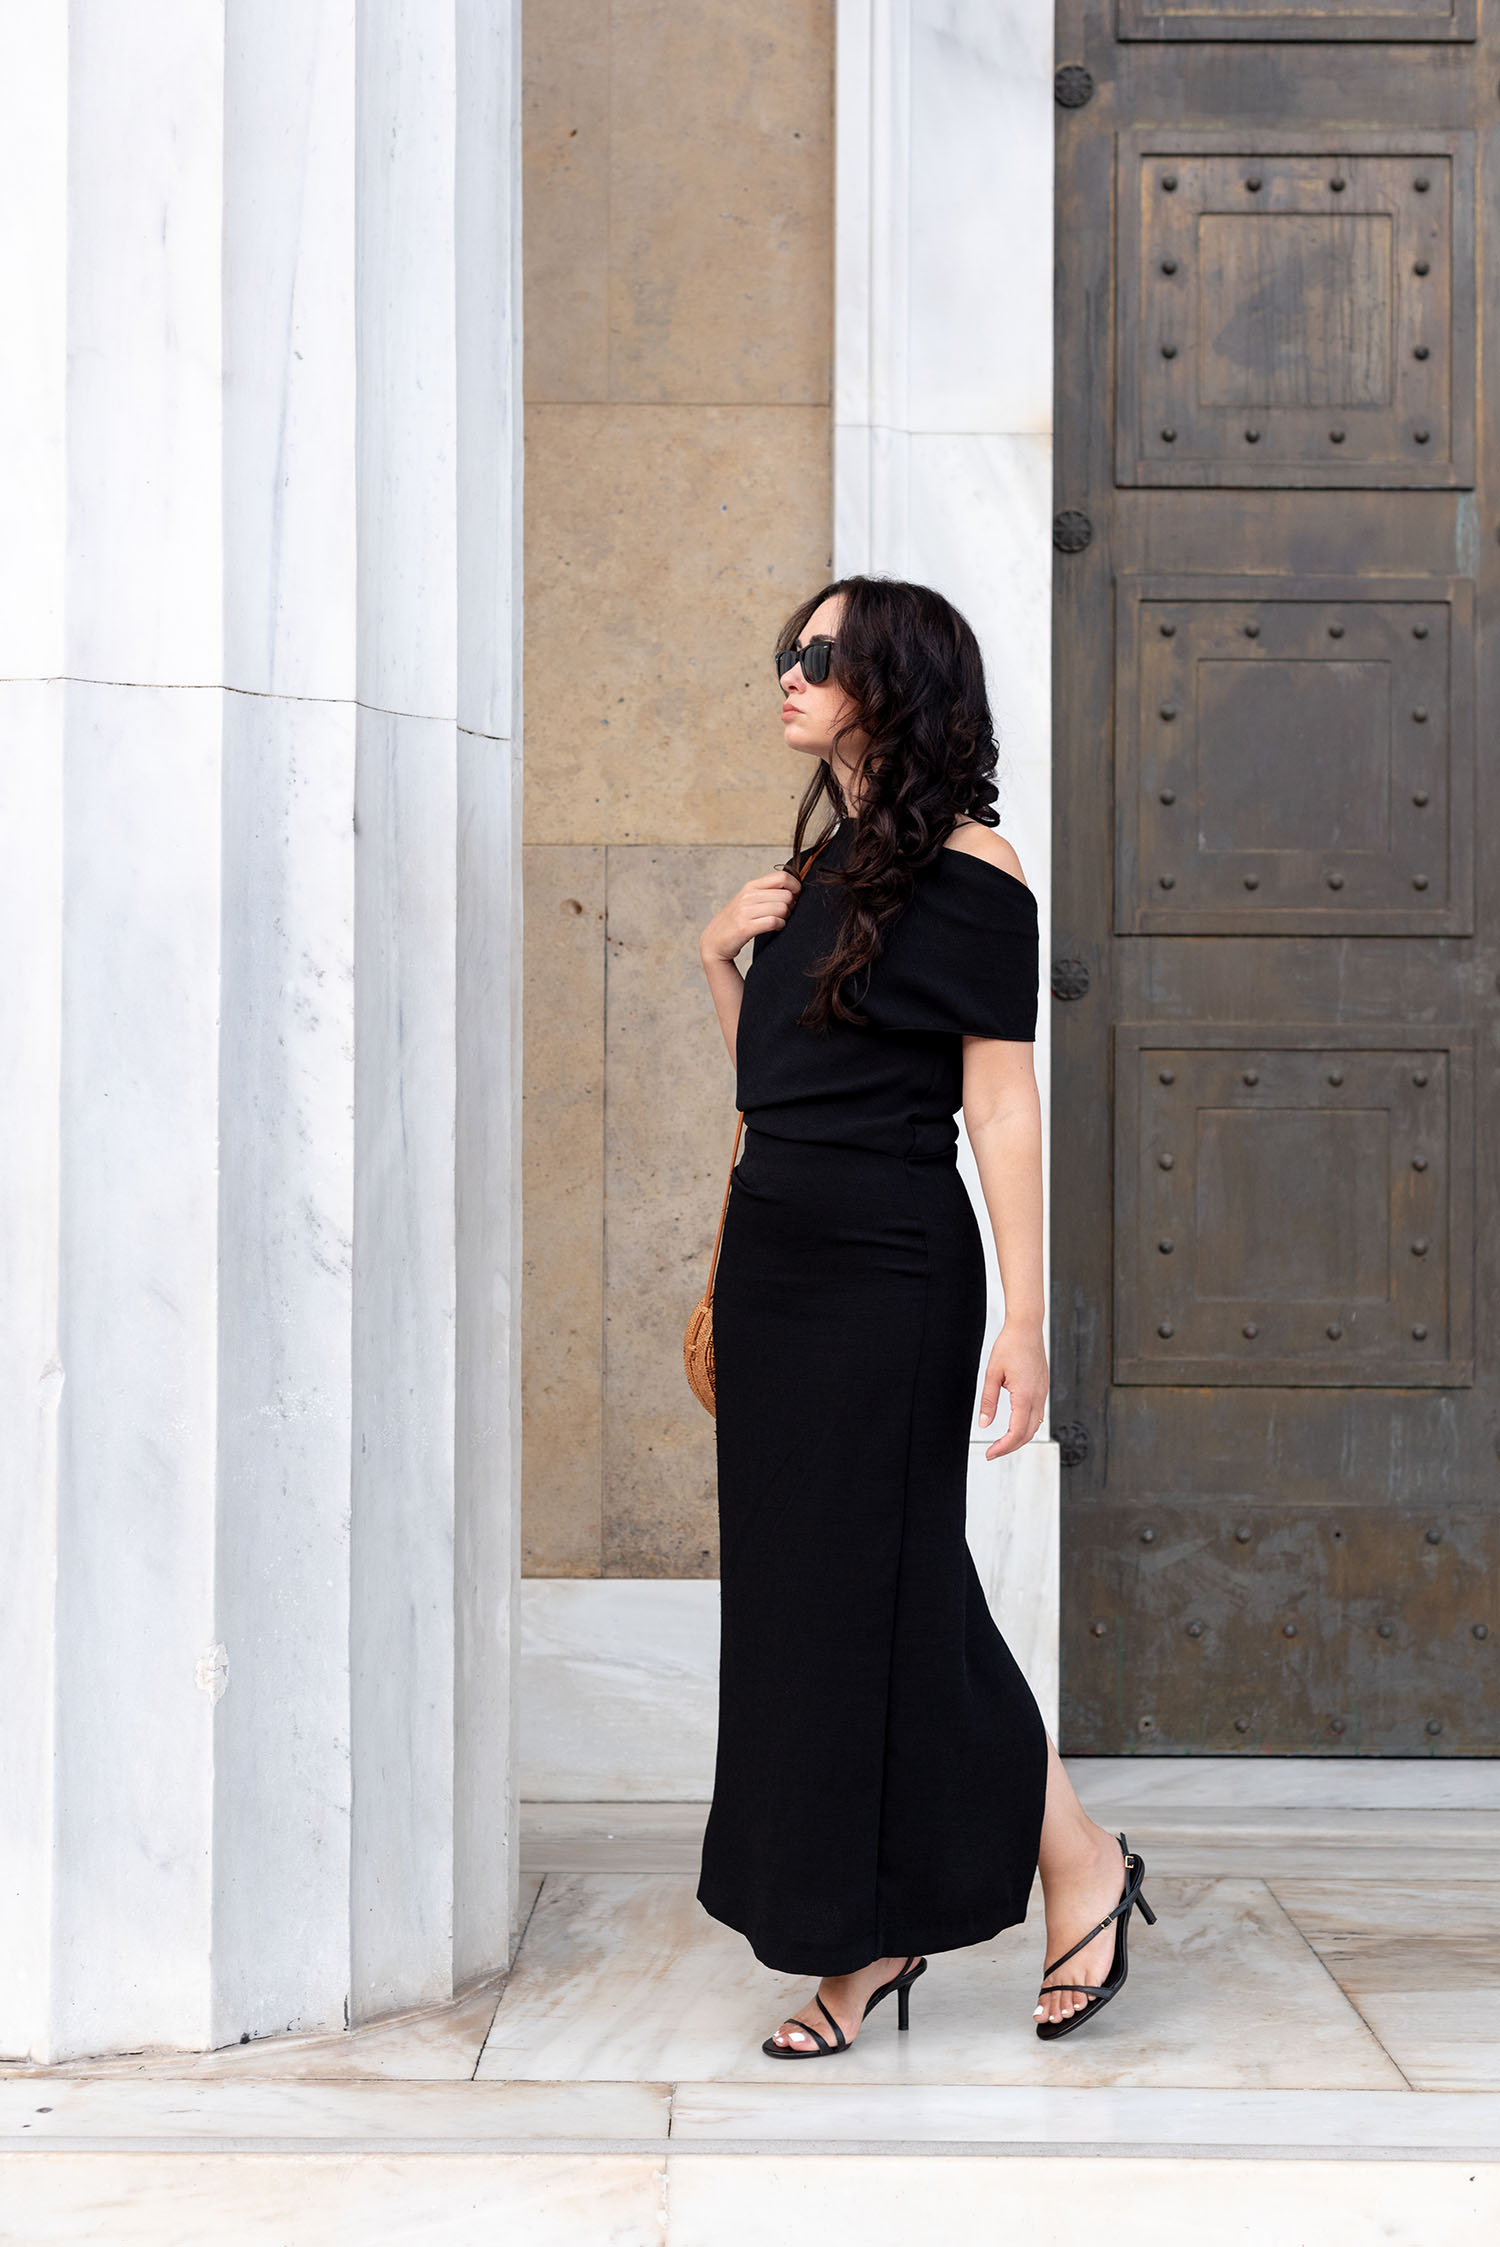 Coco & Vera - Zara black maxi dress, Zara sandals, Rayban sunglasses